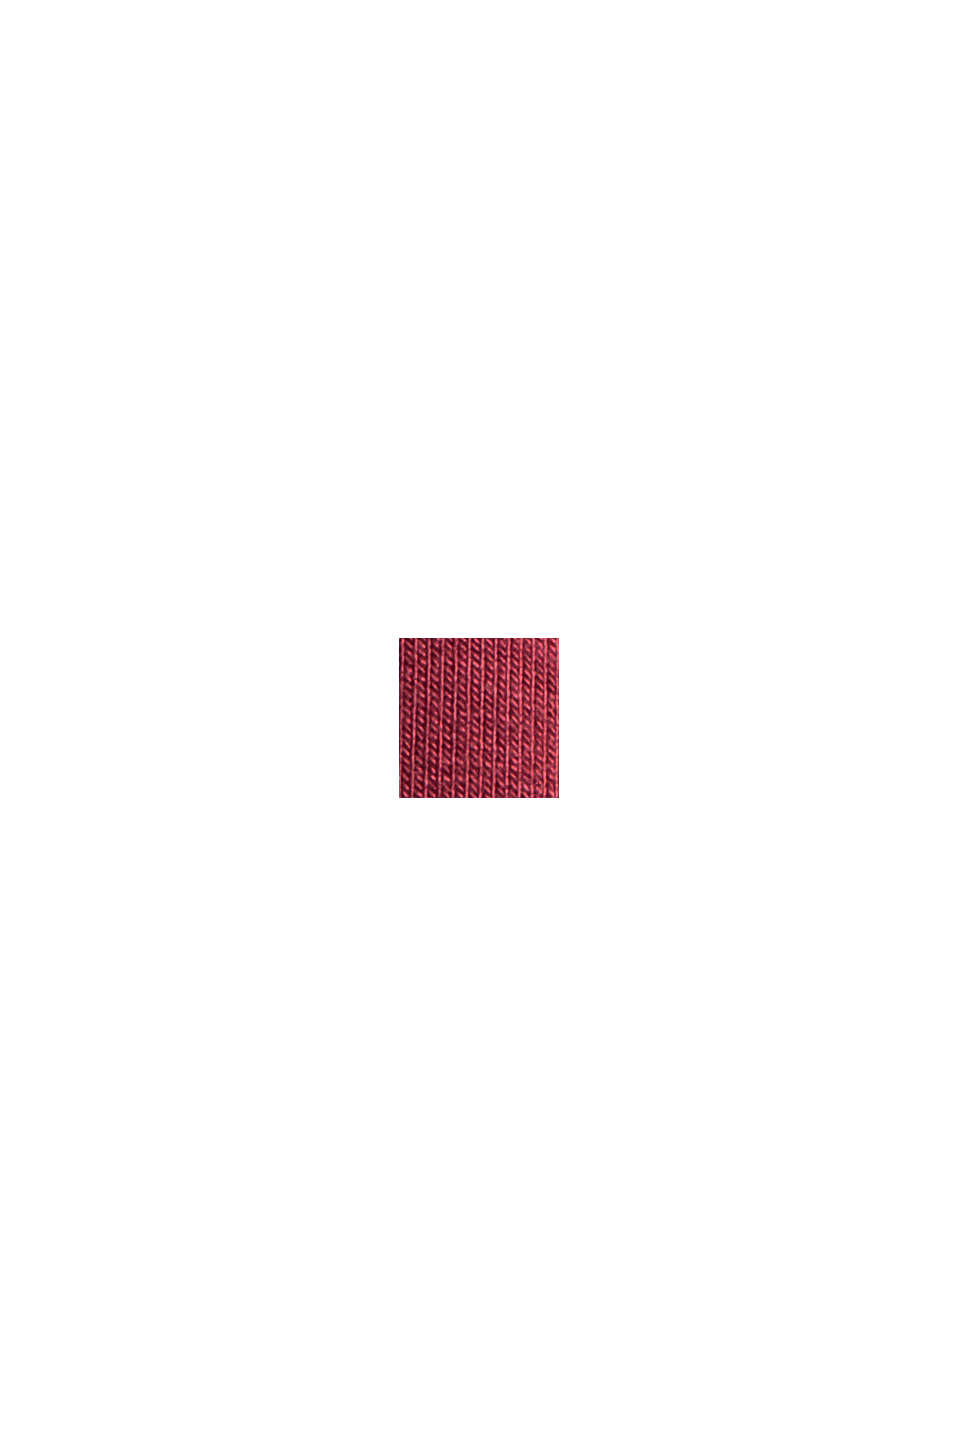 Jersey nachthemd van LENZING™ ECOVERO™, DARK RED, swatch